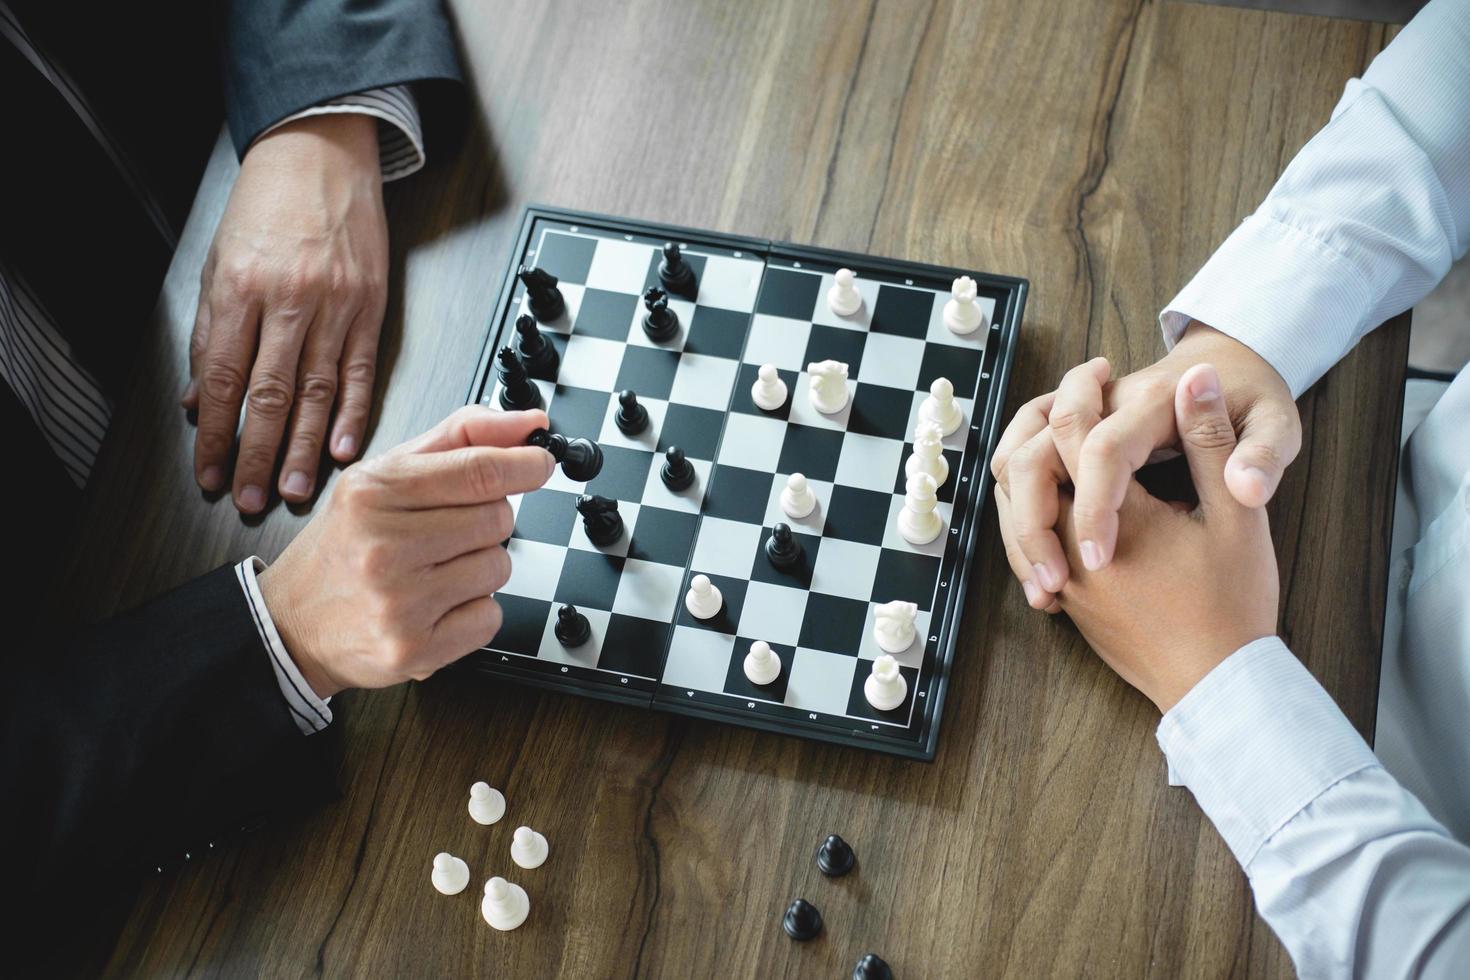 vertrouwen zakenlieden schaakspel spelen foto